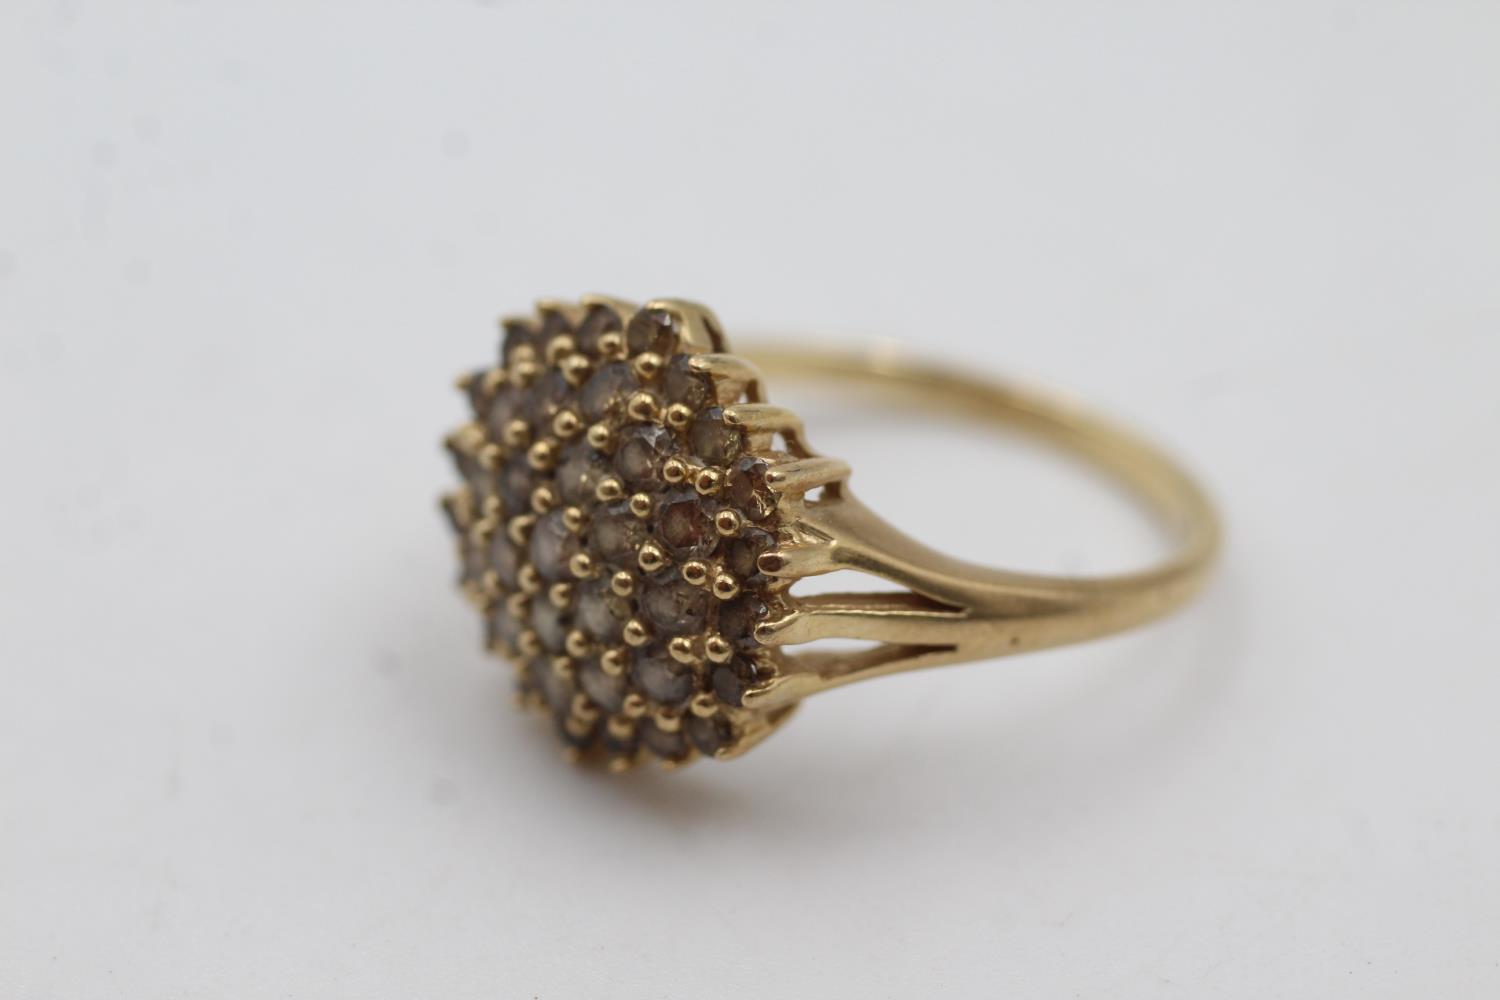 9ct gold diamond multi stone dress ring (4.6g) size T - Image 2 of 4